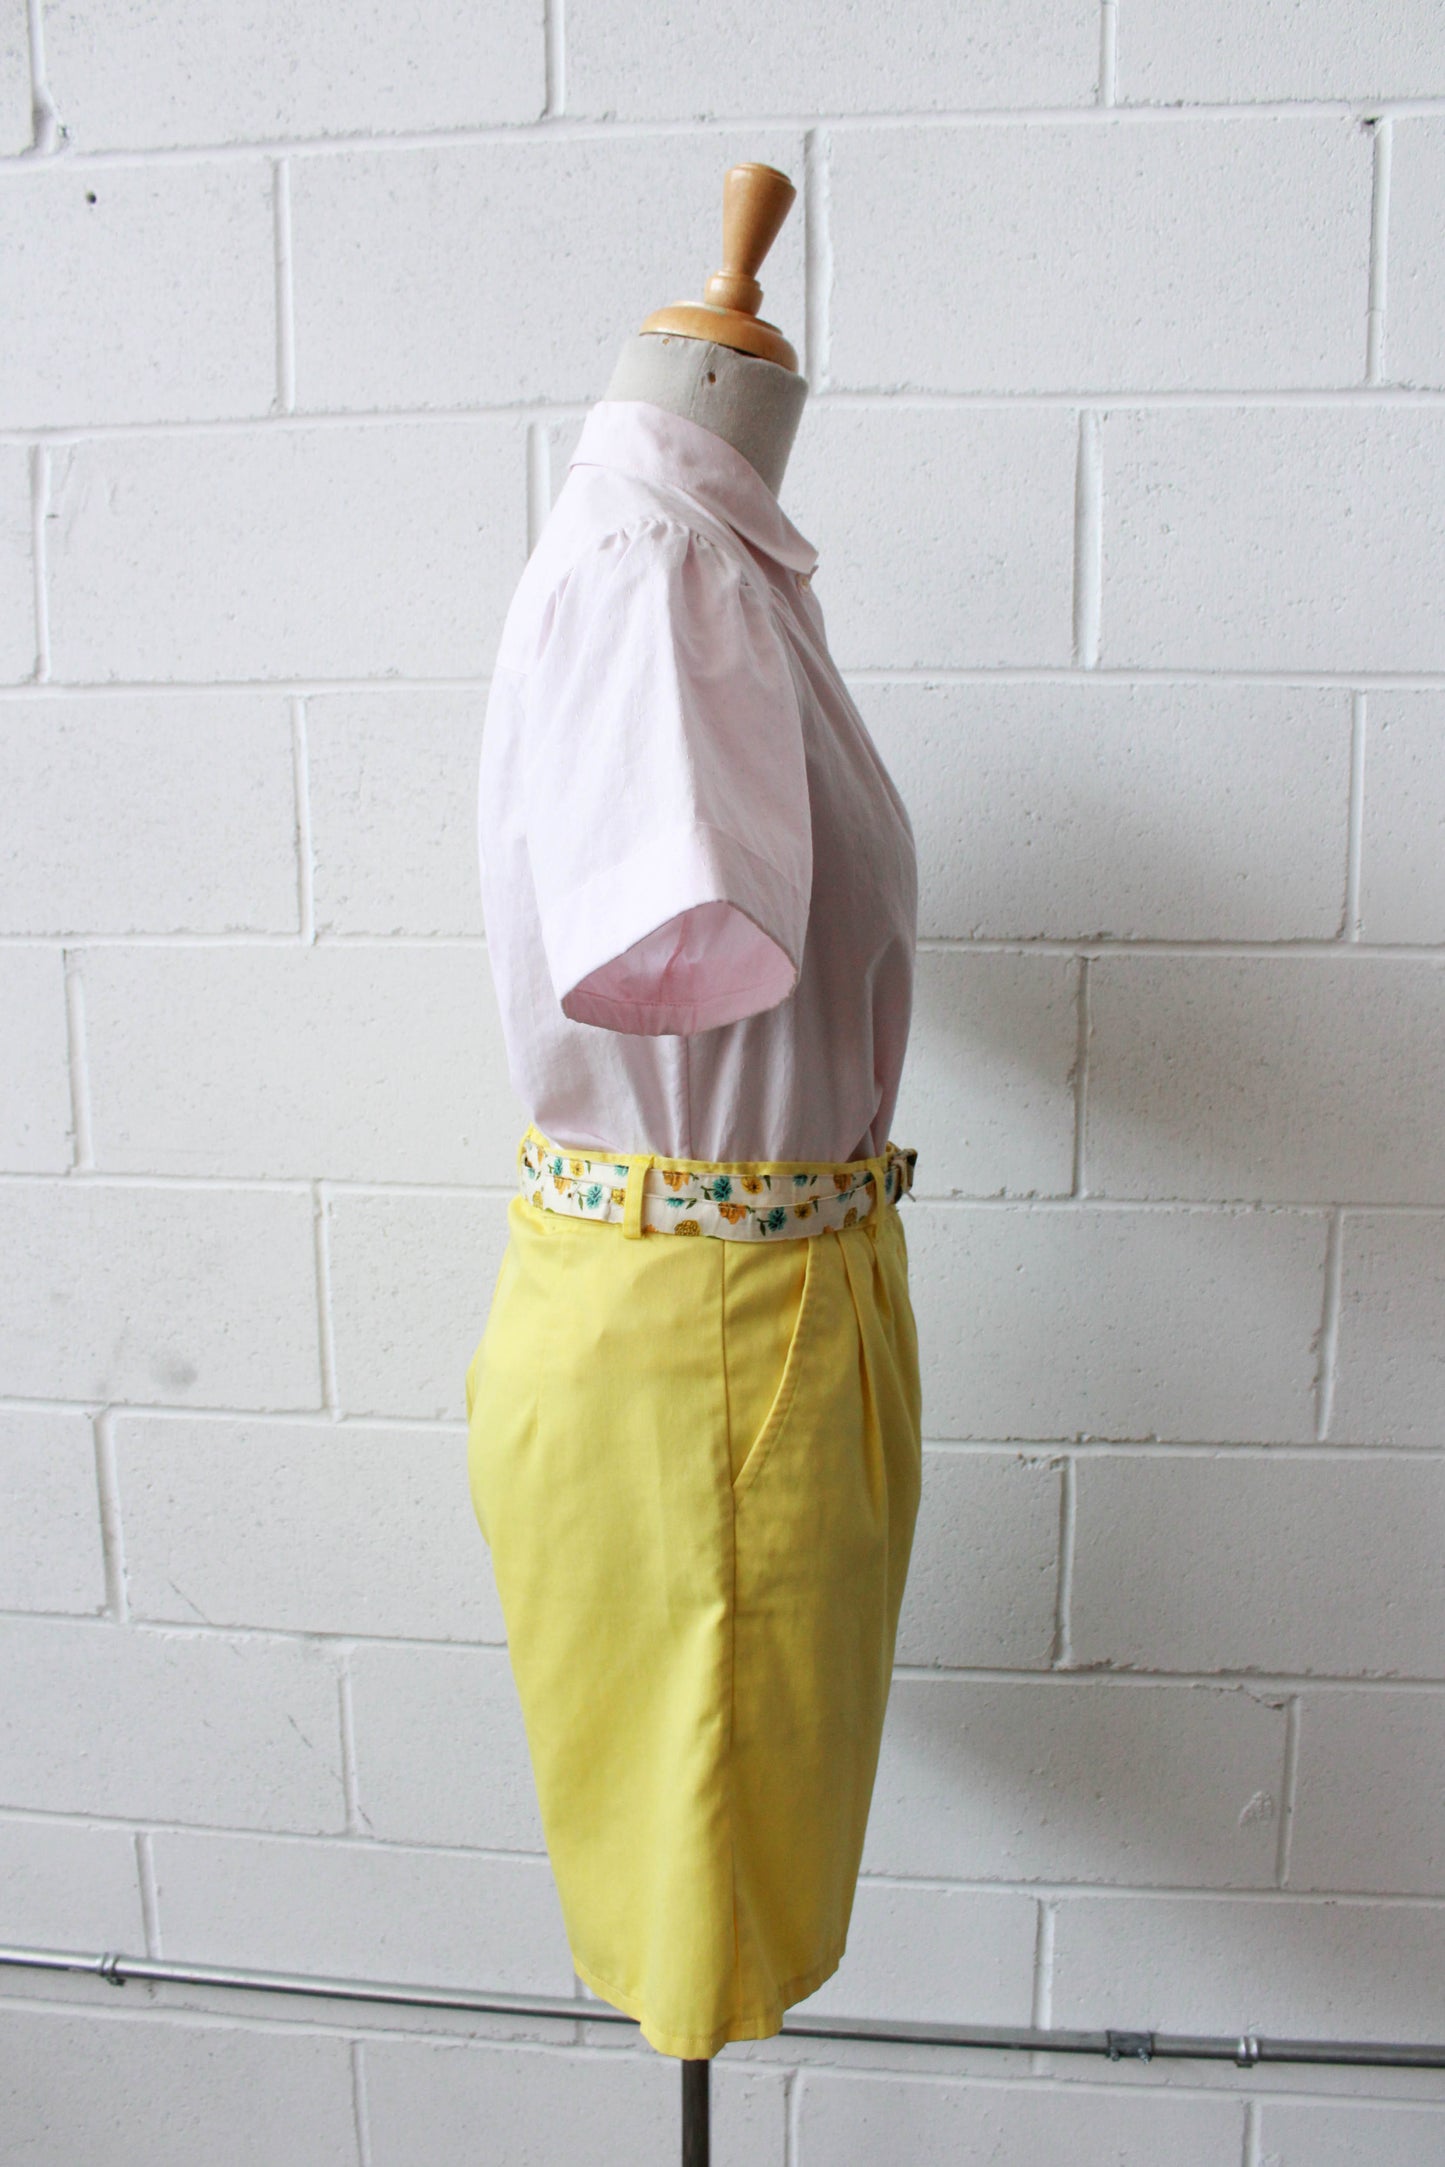 1980s Yellow High Waisted Shorts, Waist 28"